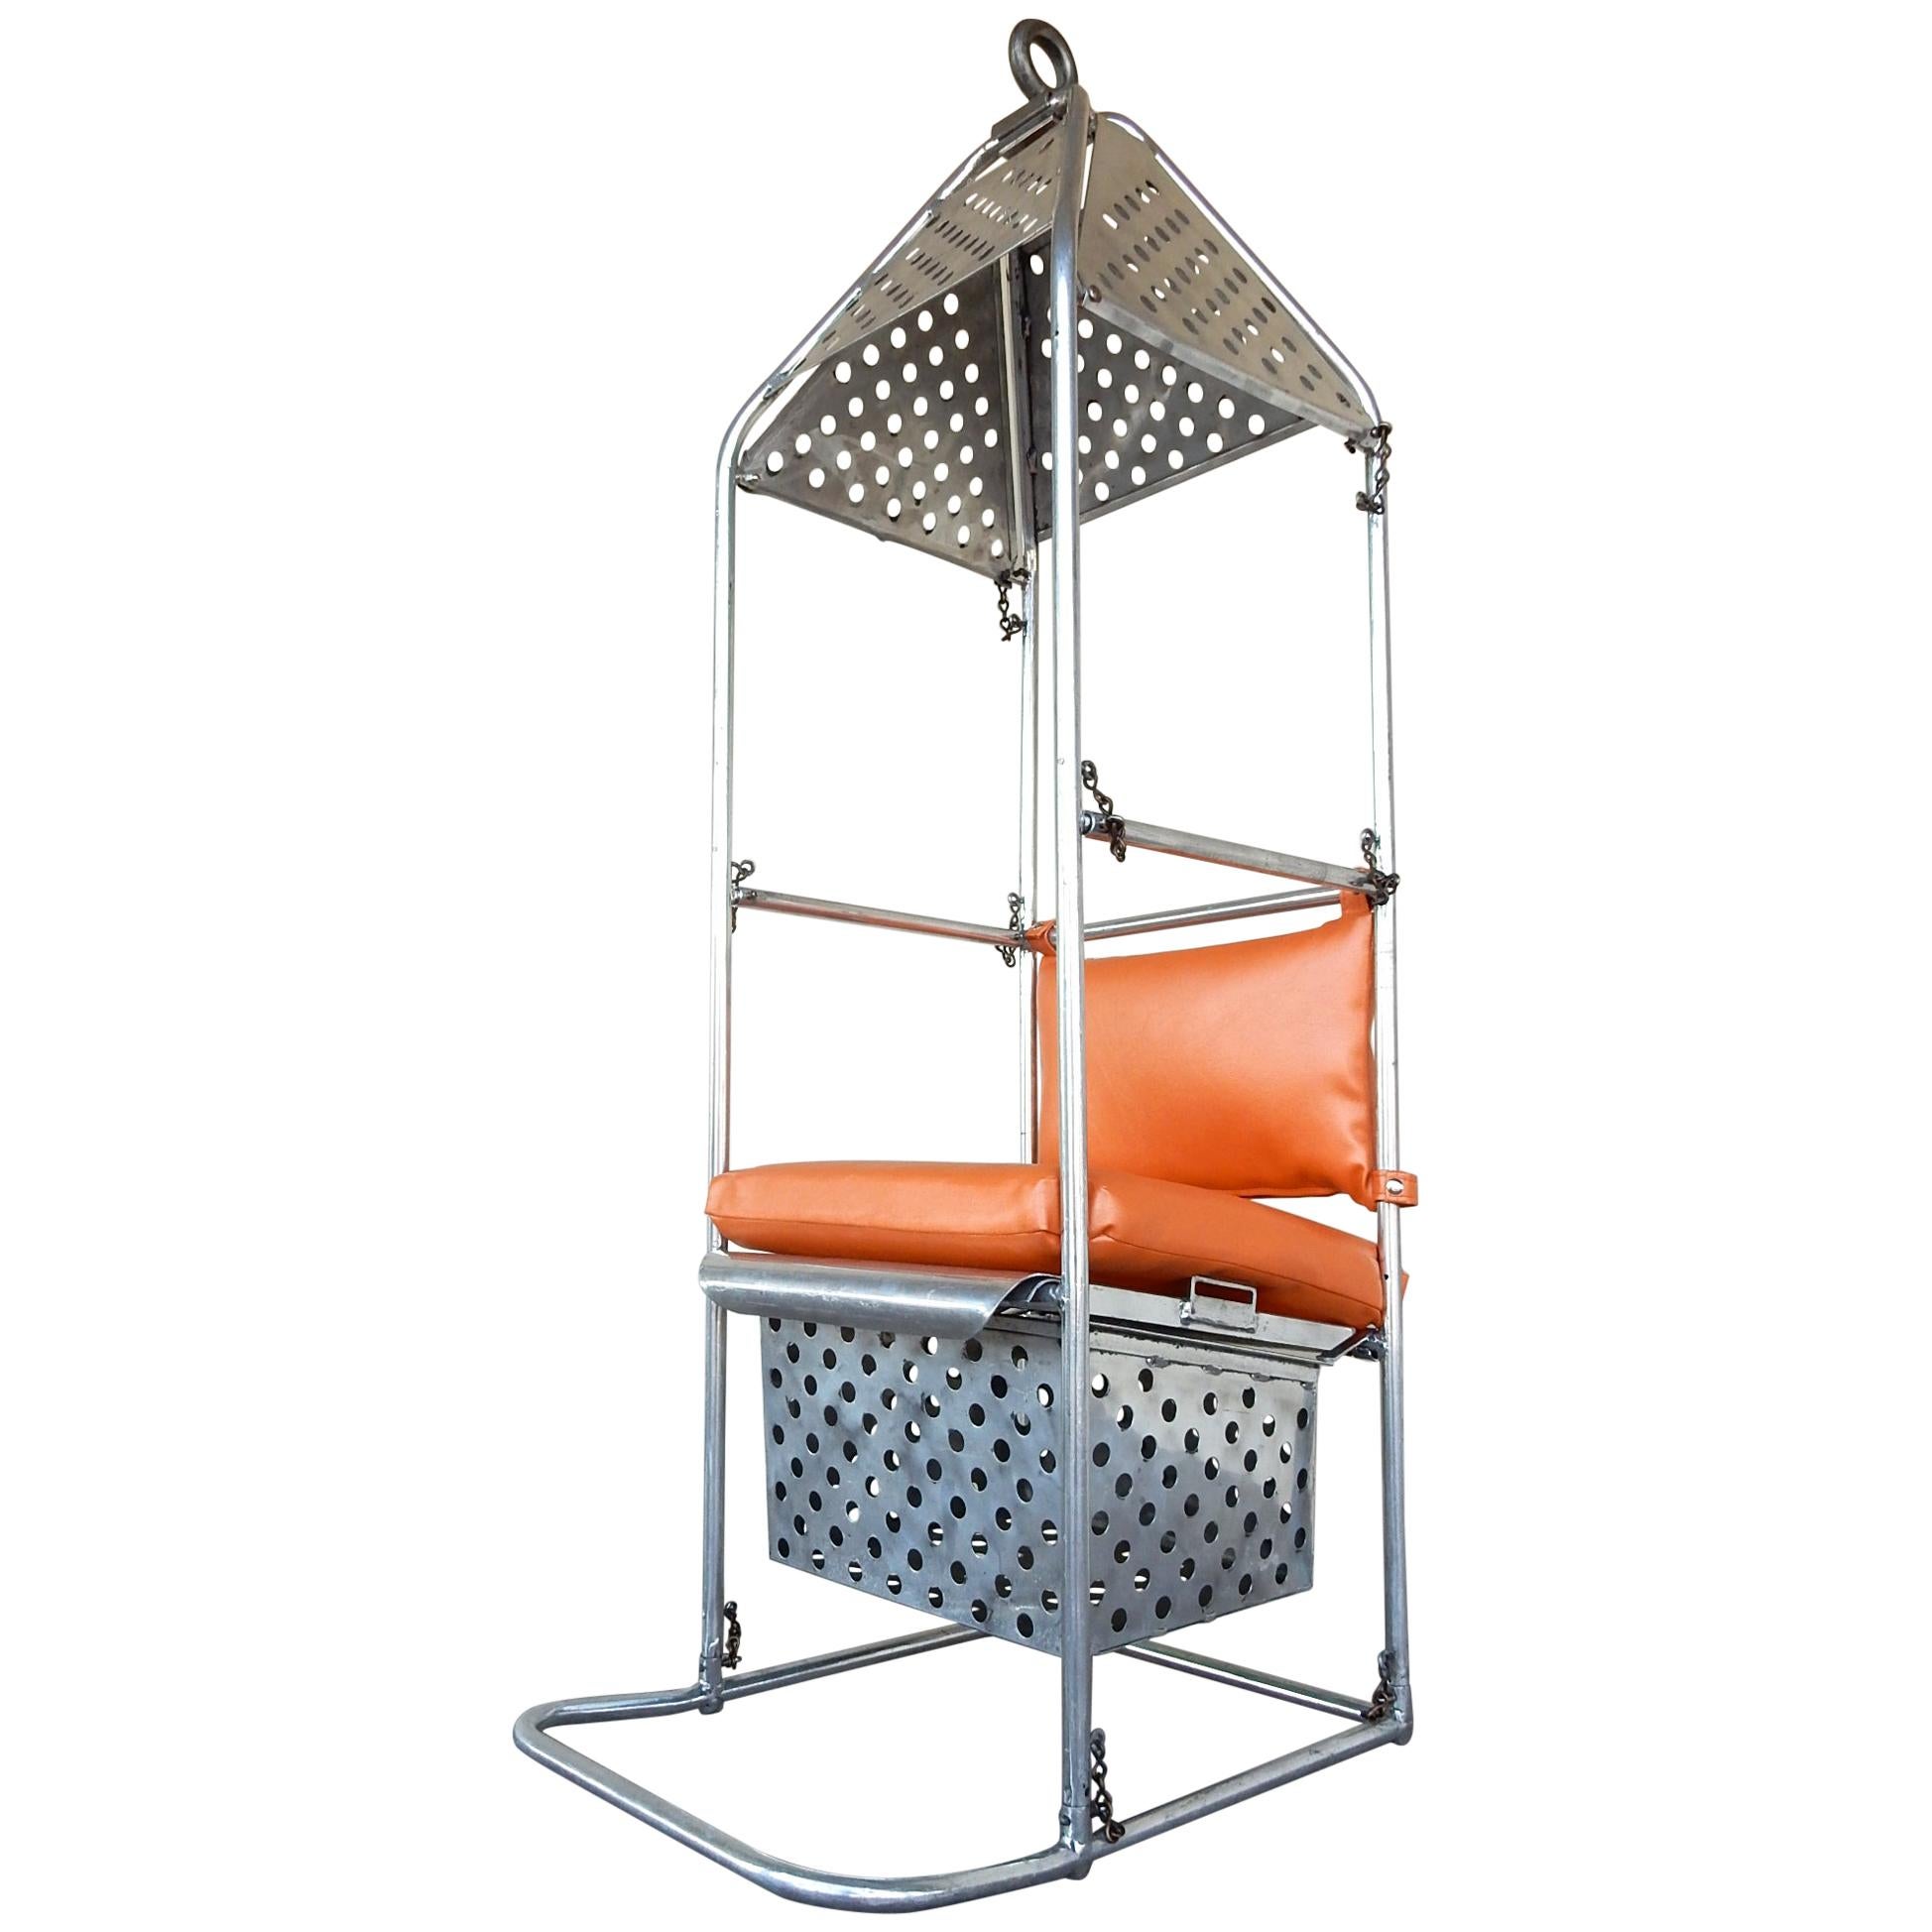 1950s Industrial Aluminum Crane or Airplane Hoist Canopy Chair